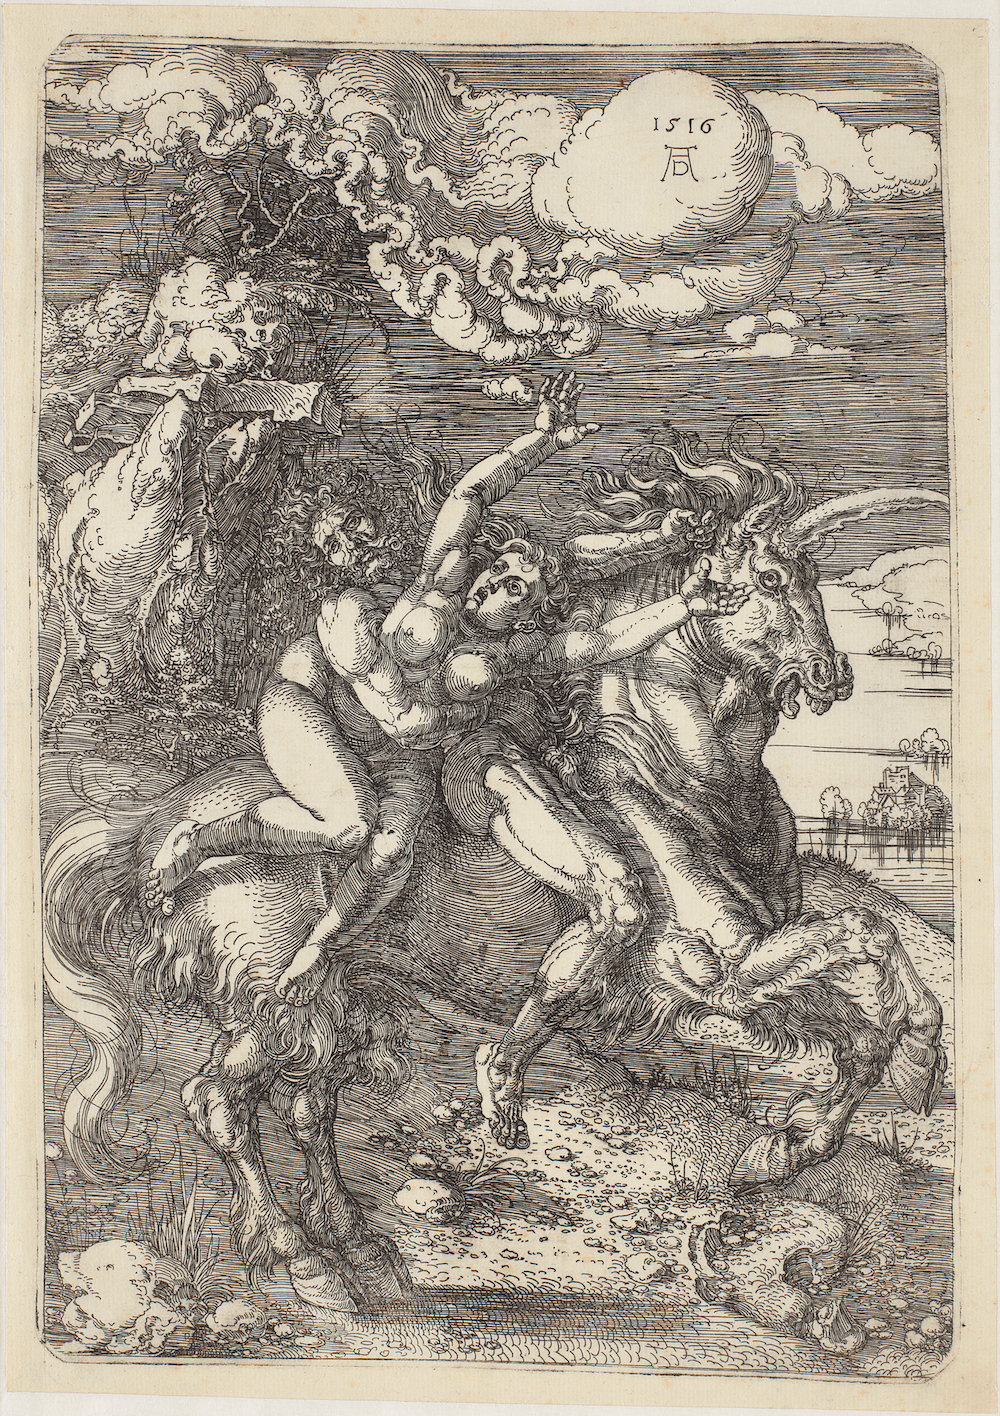 Rapimento su un Unicorno by Albrecht Dürer - 1516 - 393 x 230 mm 